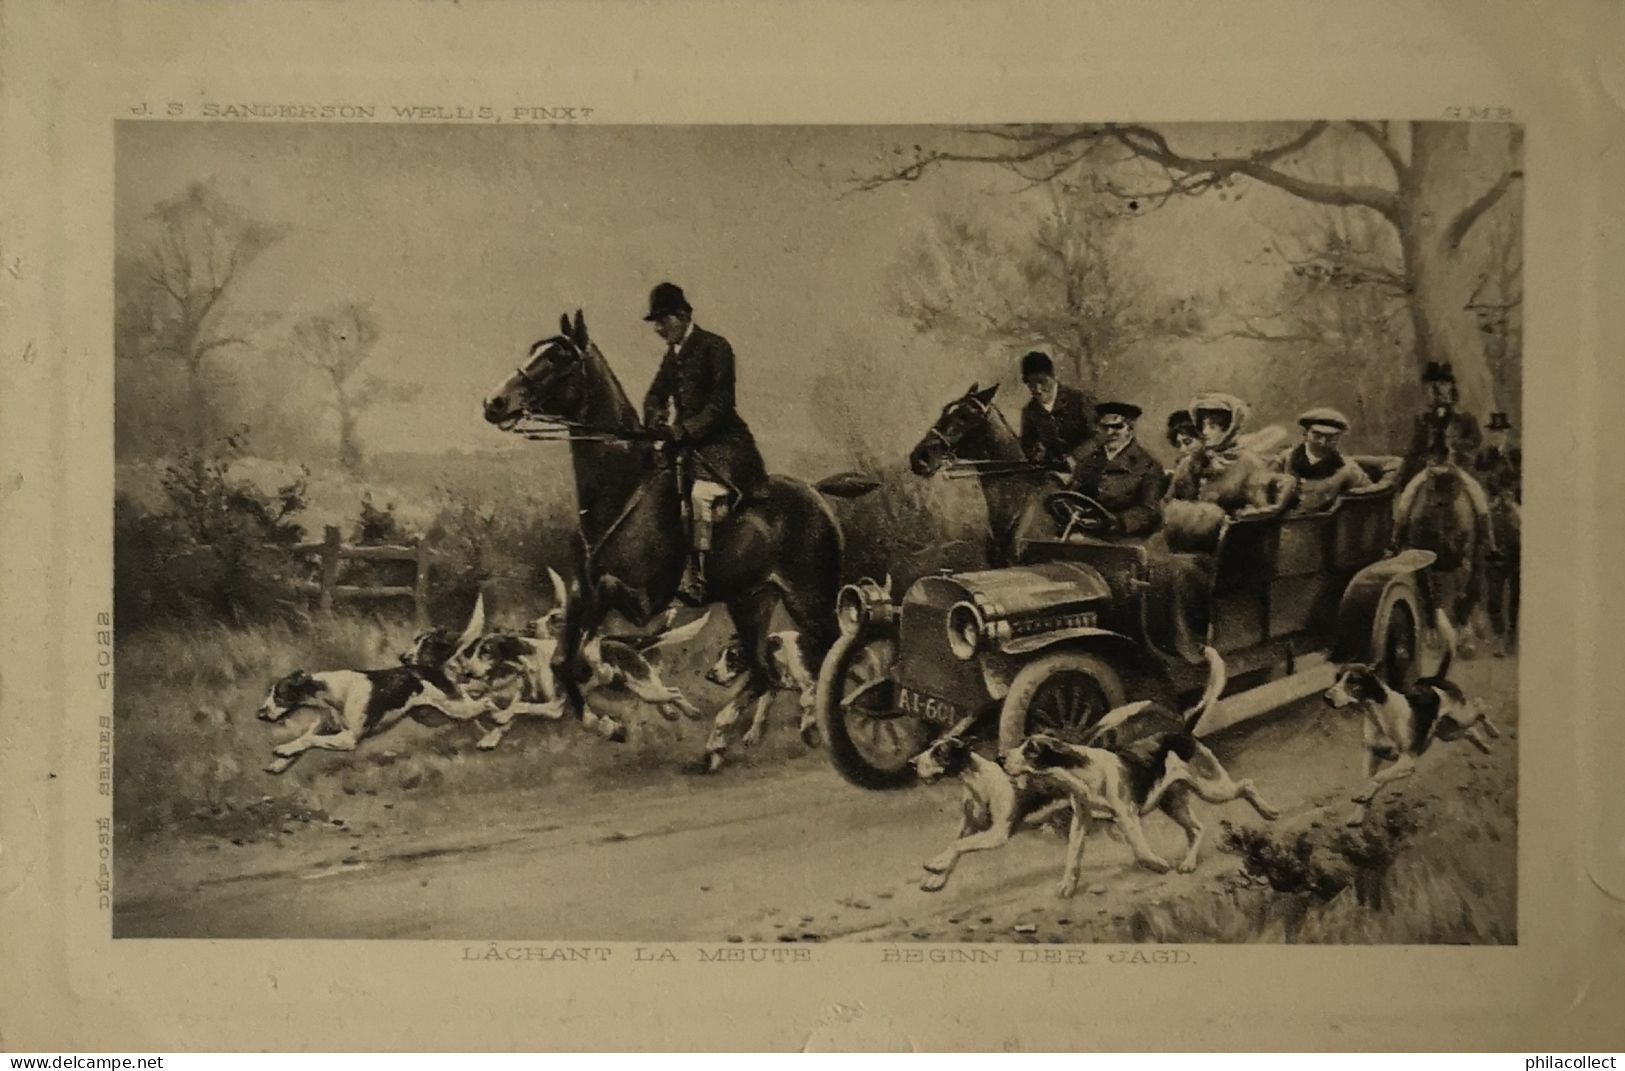 Horses - Hunt - Automobile // Pinx. J. S. Sanderson Wells Lachant La Meute 19?? - Horse Show